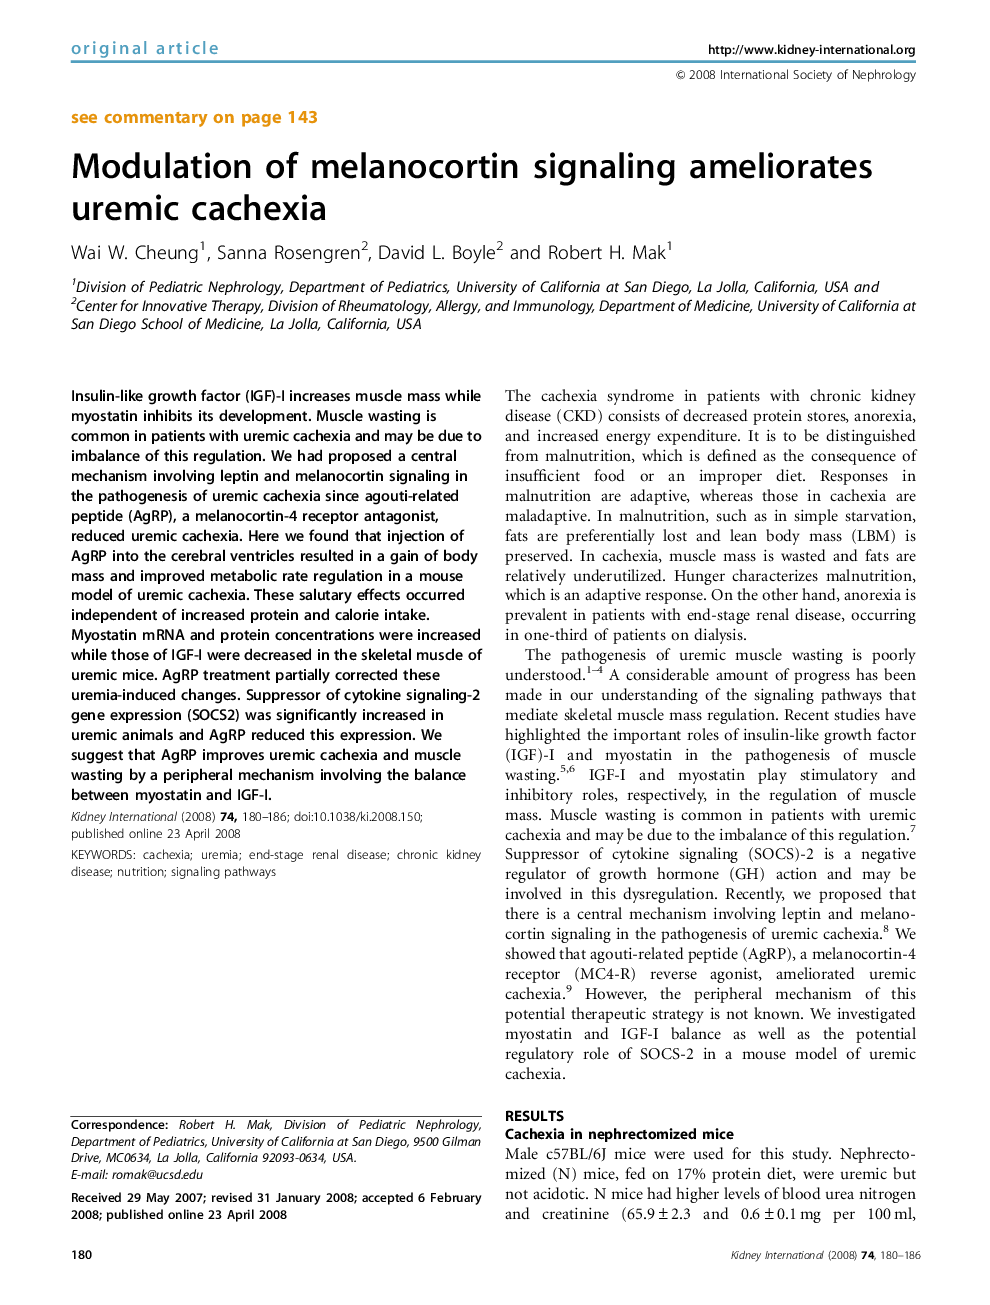 Modulation of melanocortin signaling ameliorates uremic cachexia